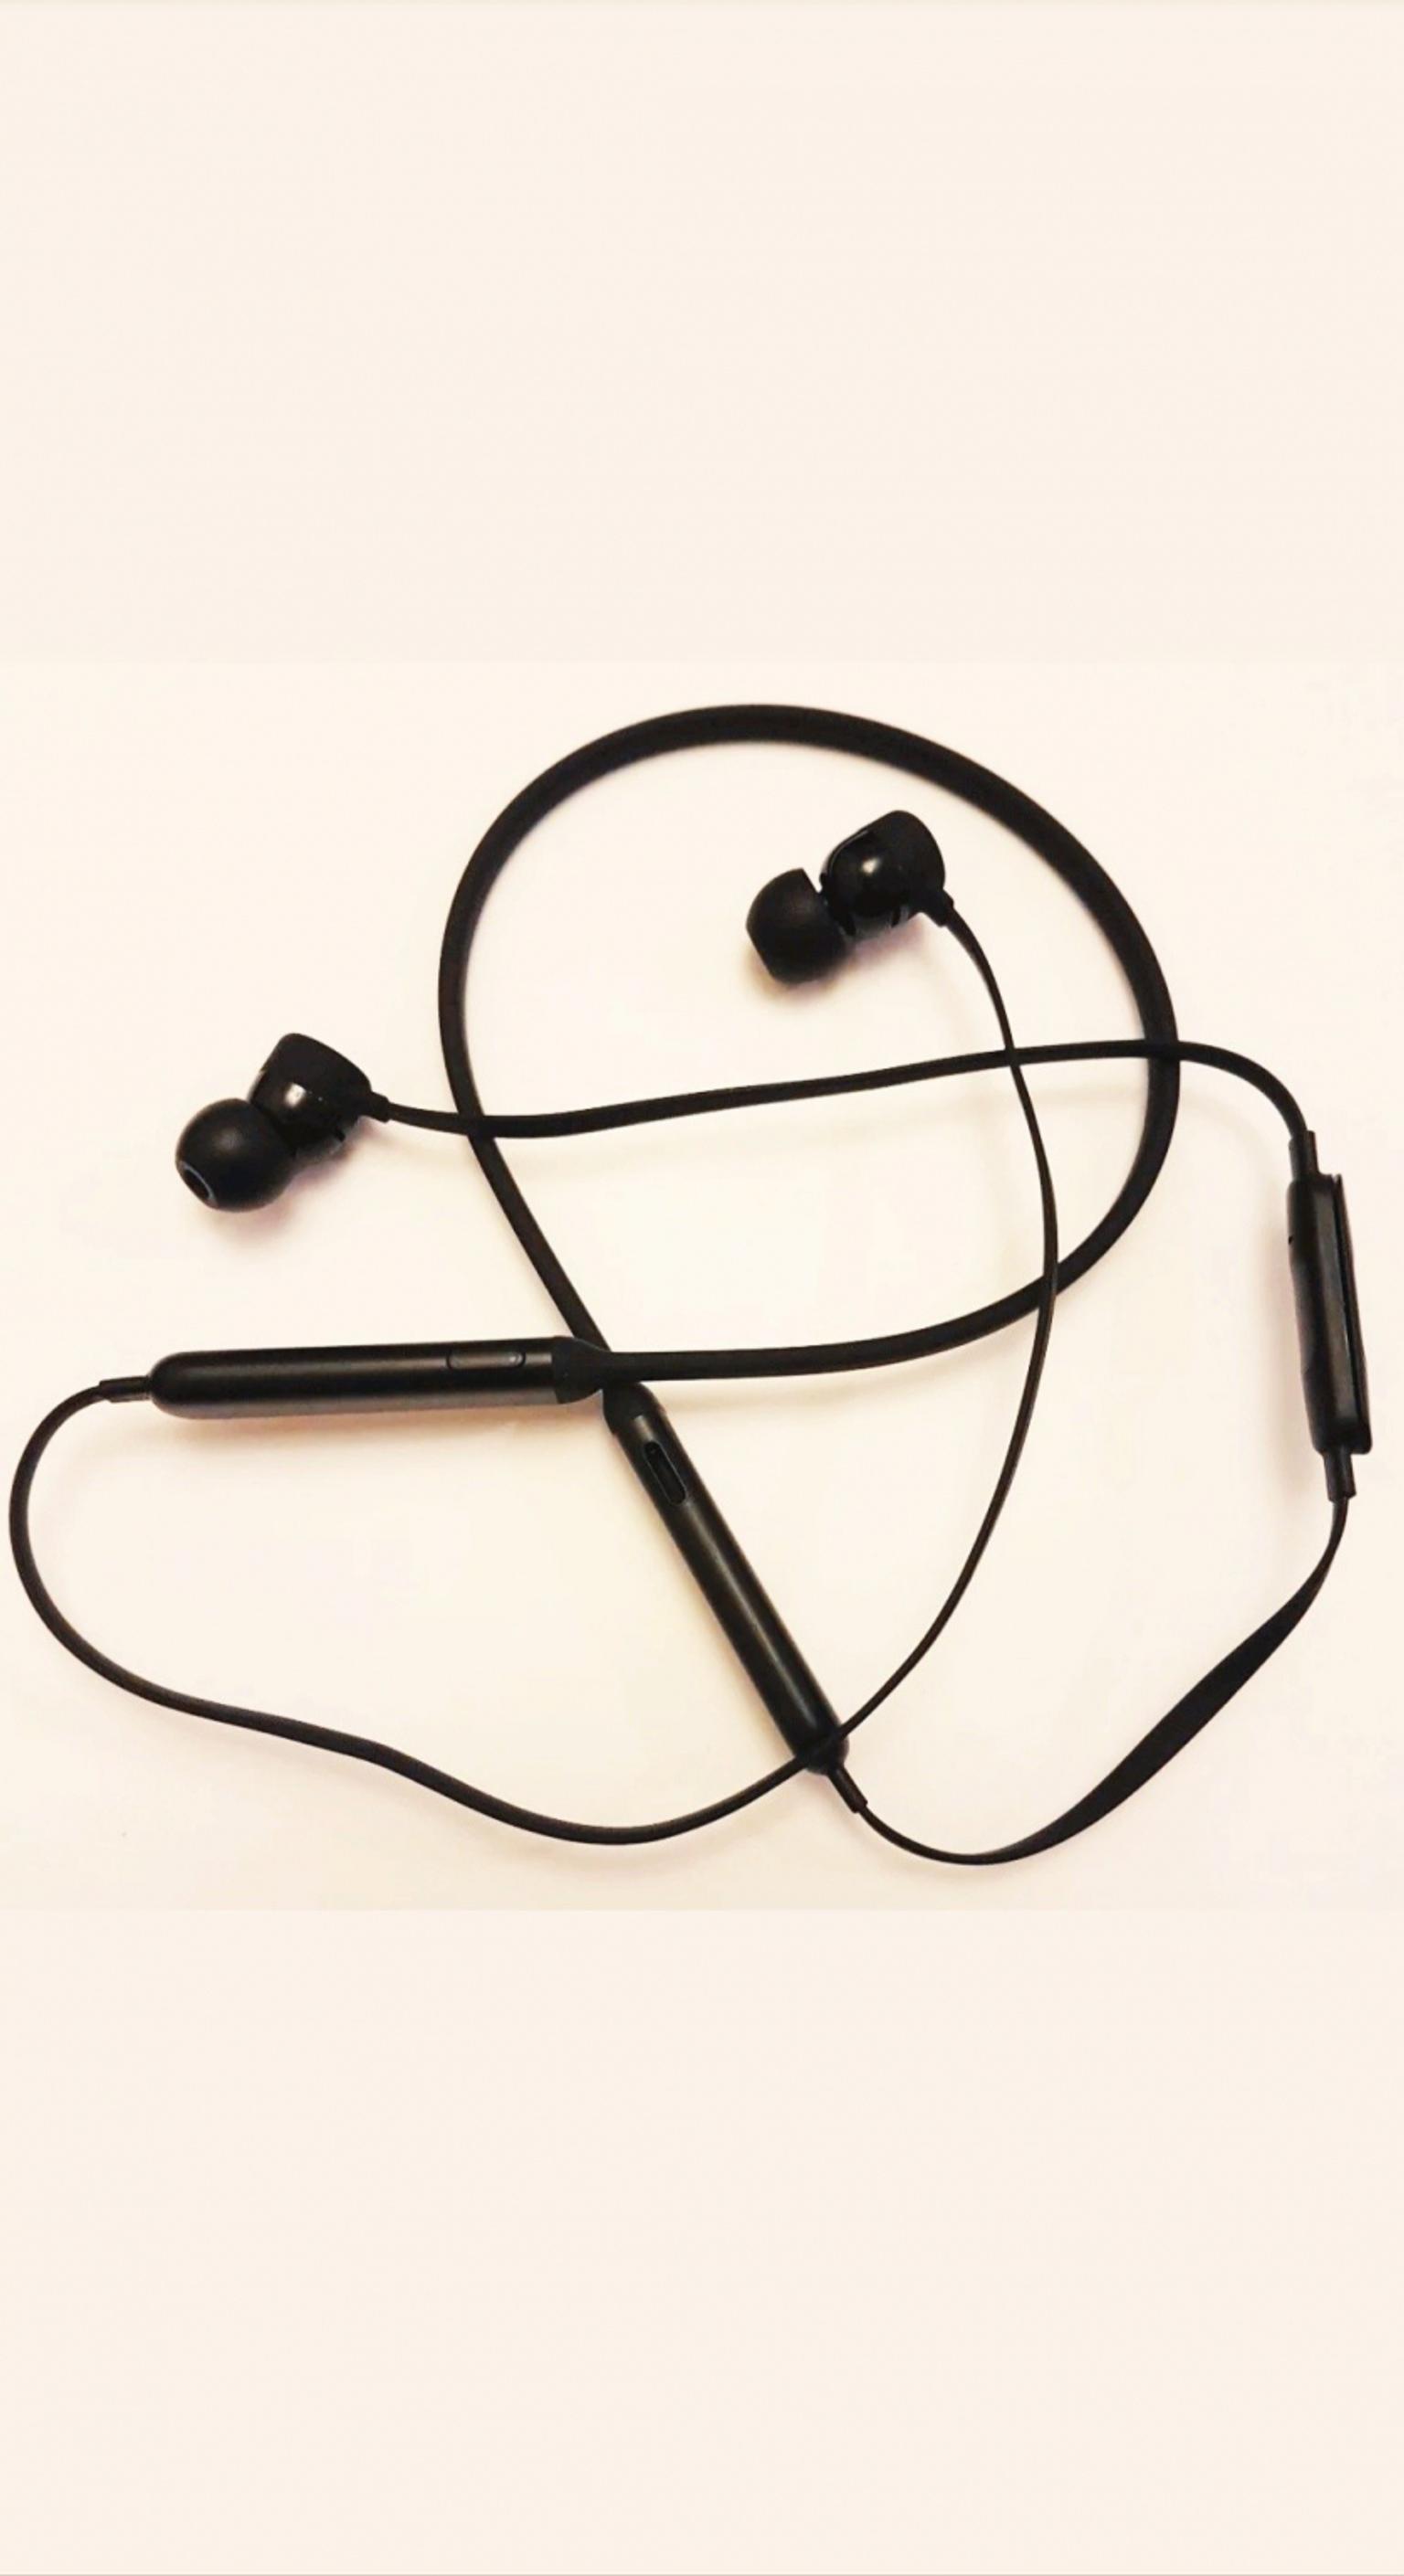 used beats wireless earbuds